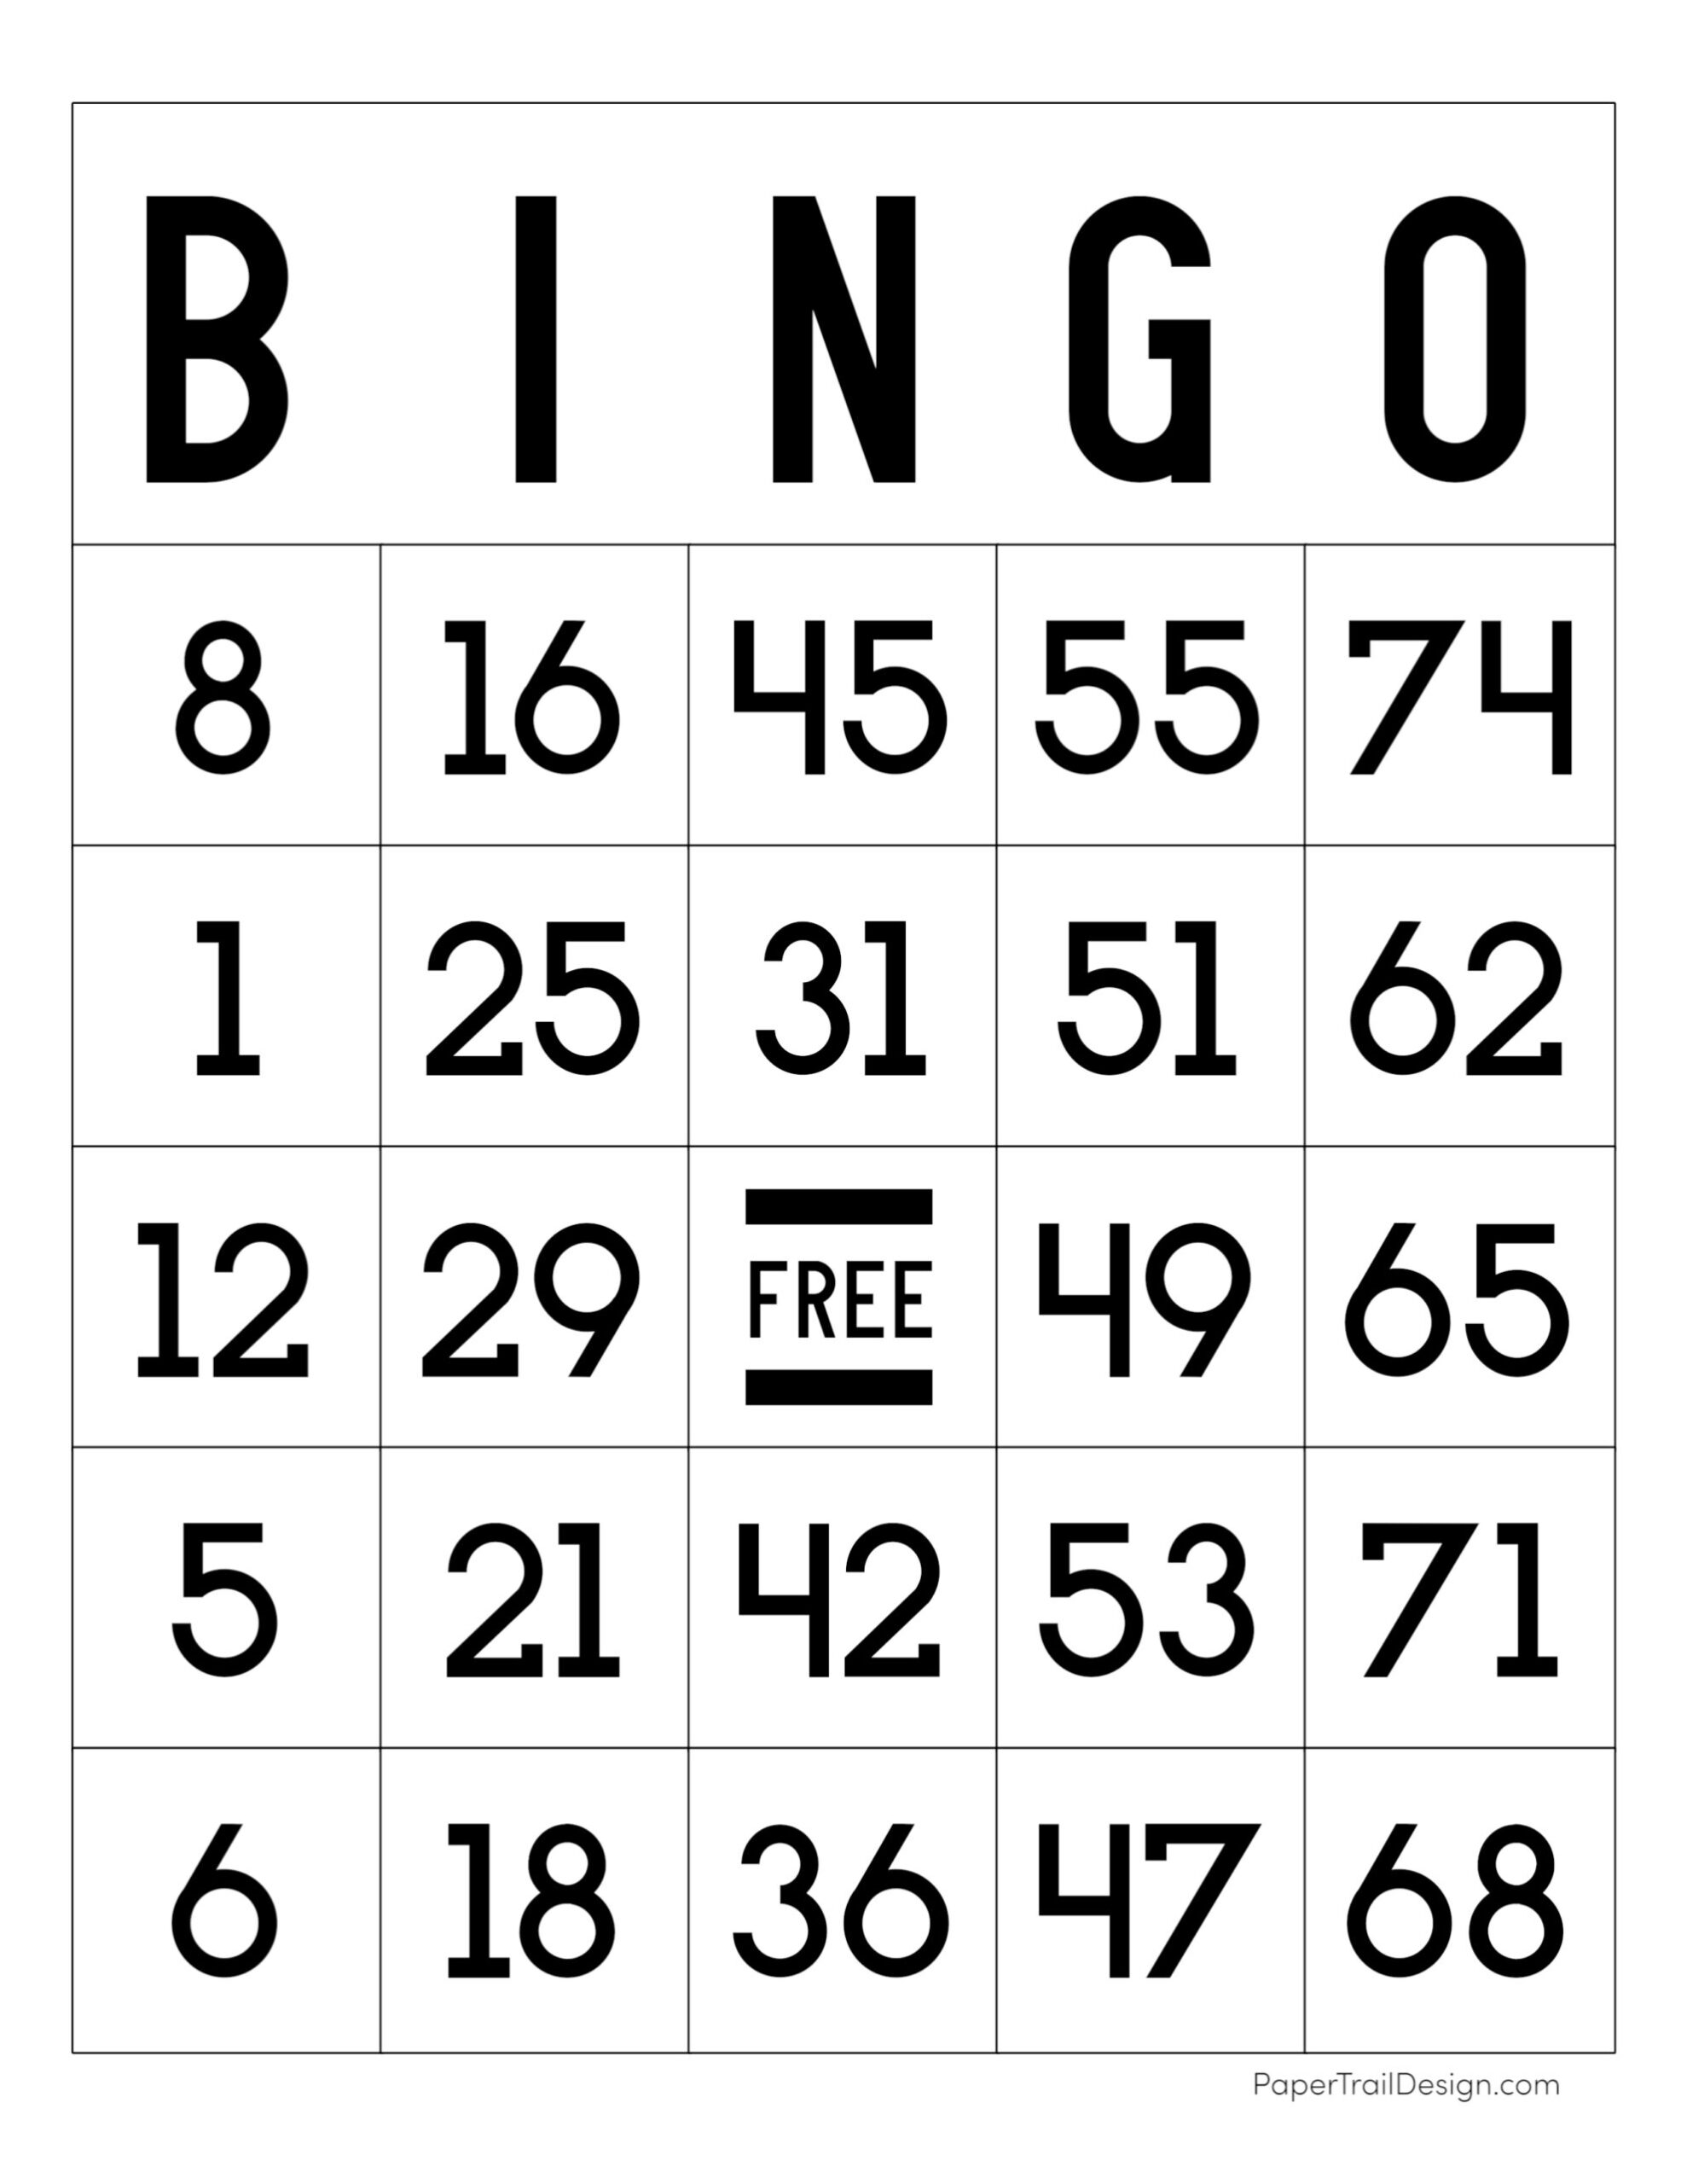 Free Printable Bingo Cards - Paper Trail Design in Free Printable Bingo Cards With Numbers